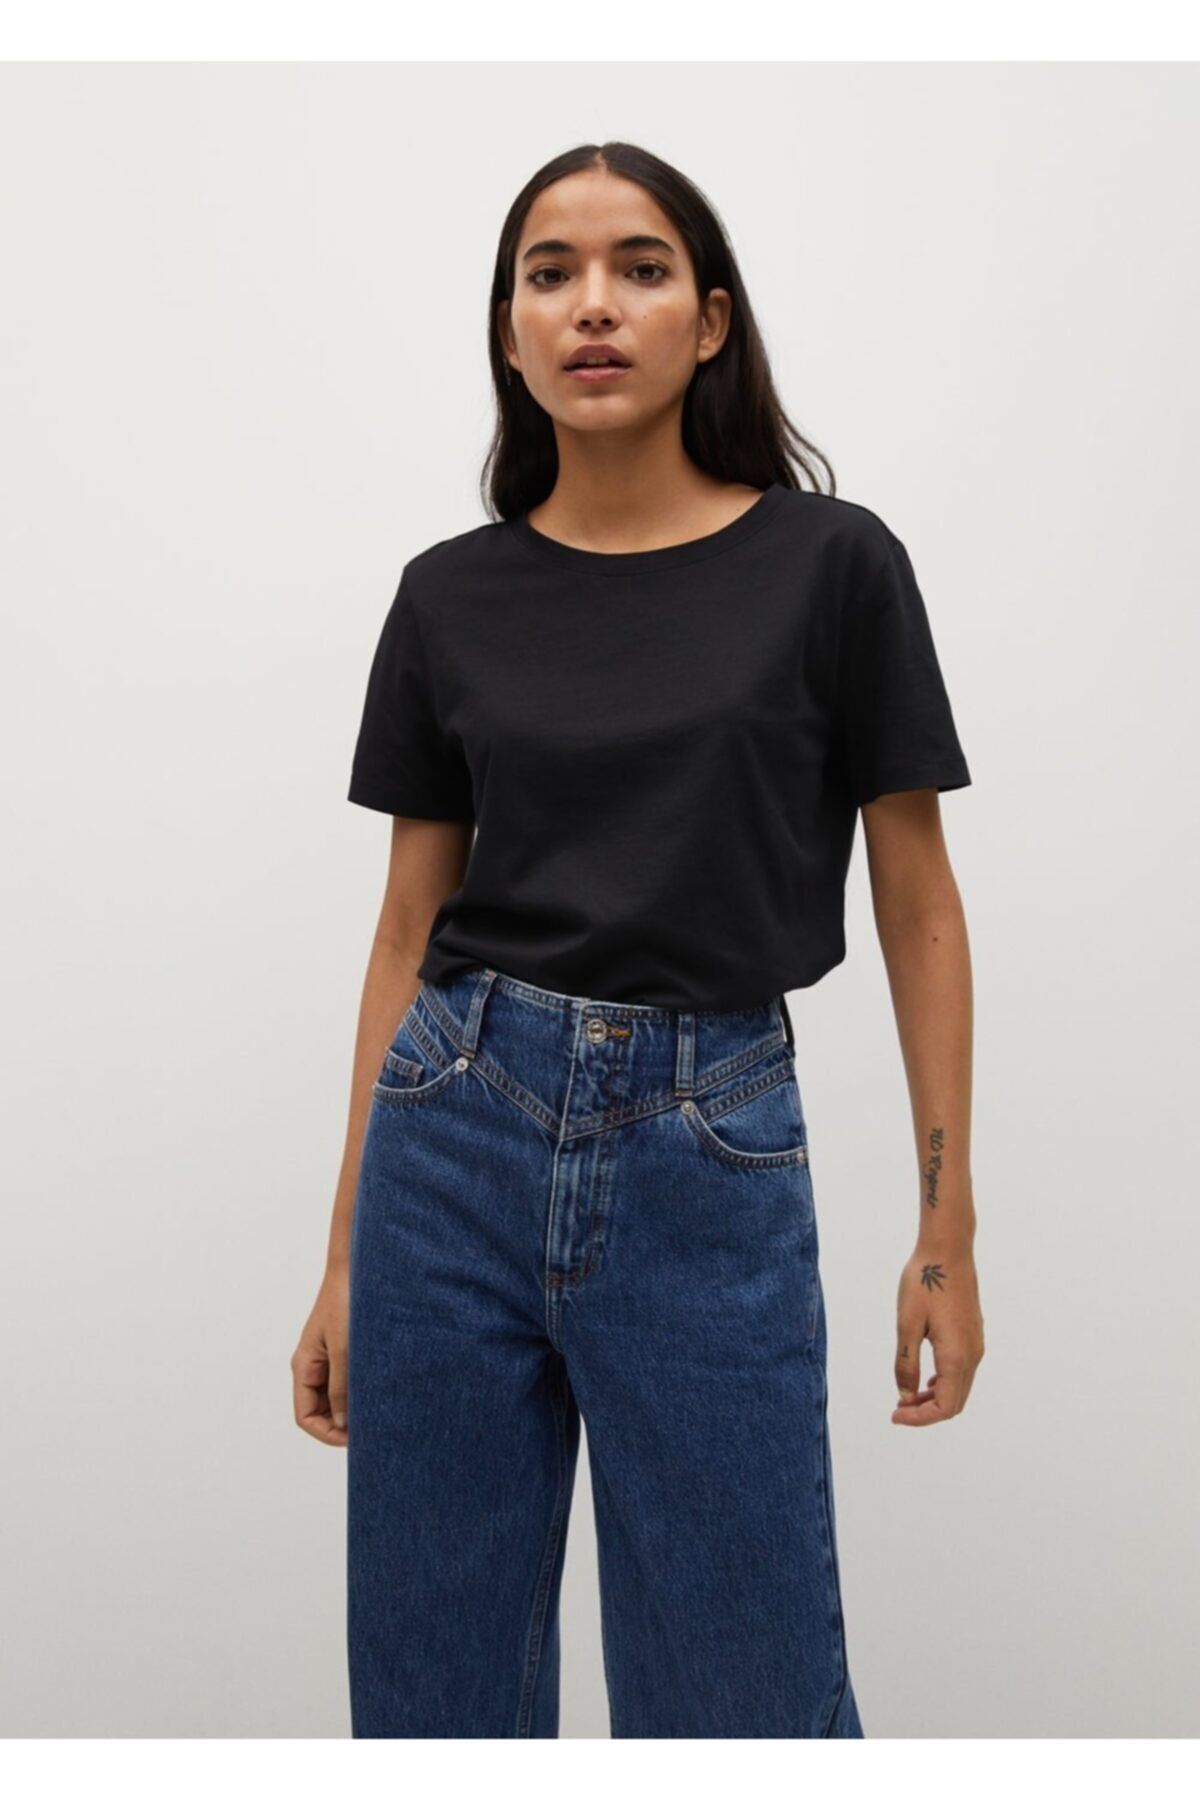 MANGO Kadın Siyah Organik Pamuklu Basic Tişört